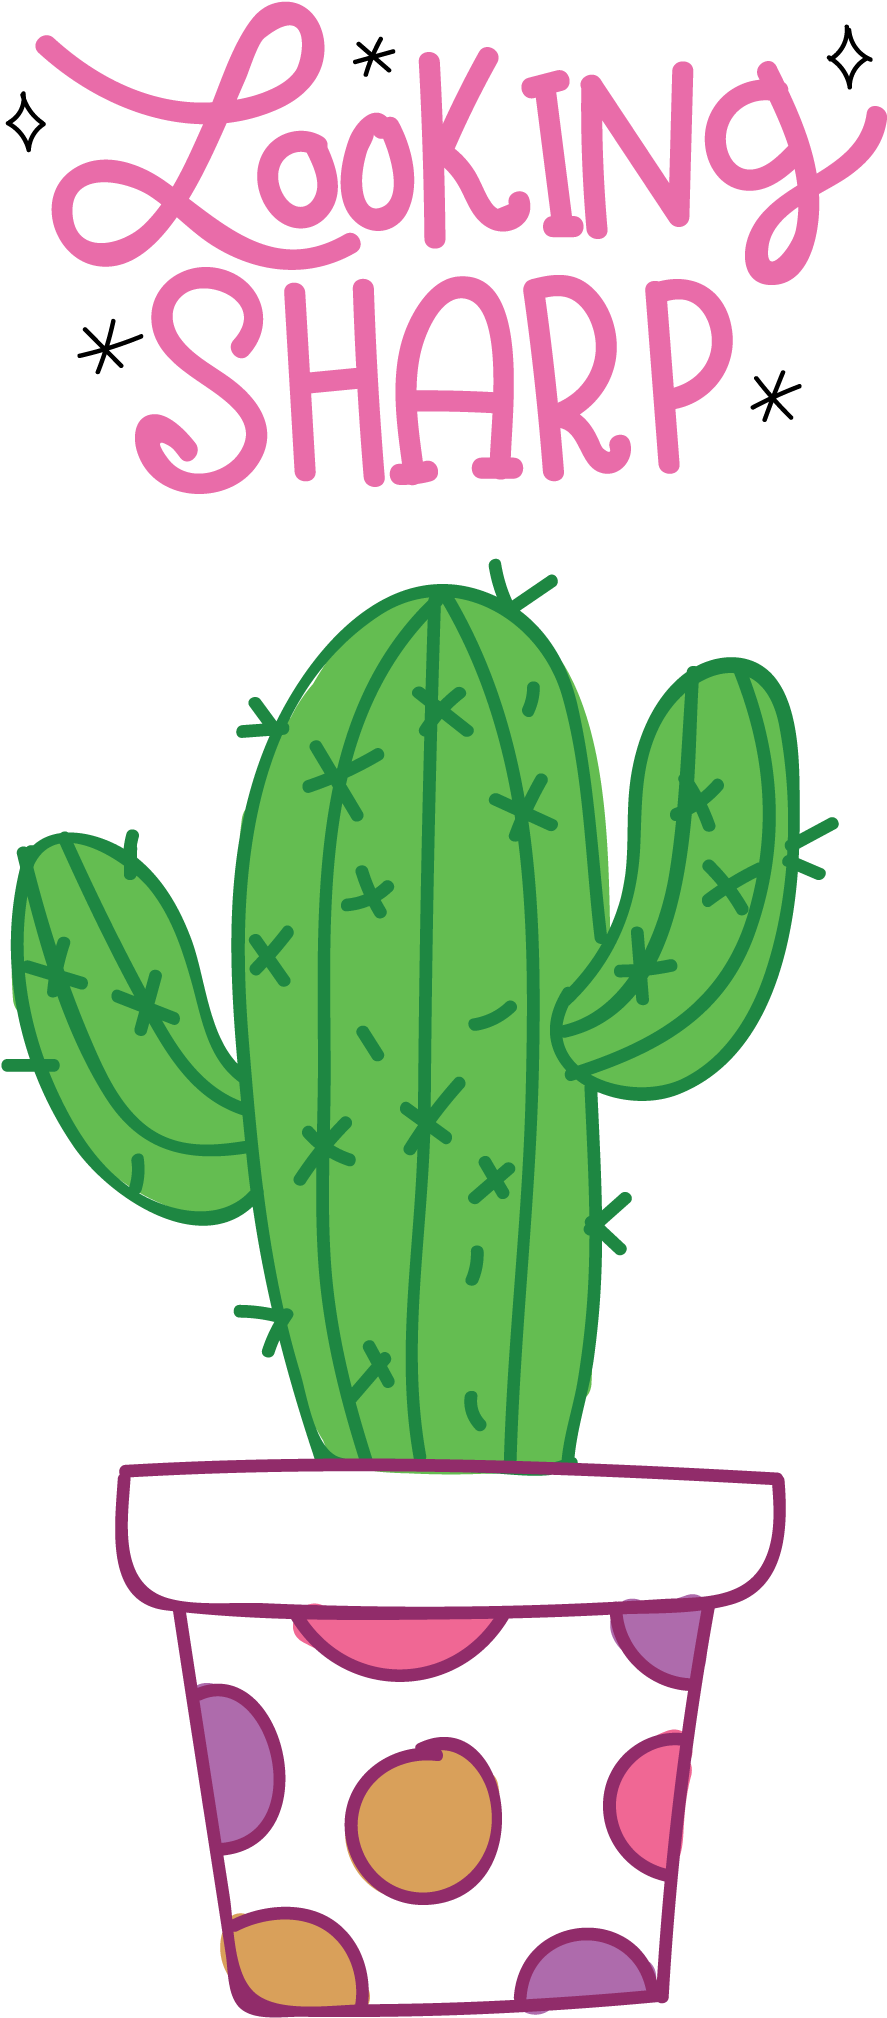 Previous Slide - Cactus (1051x2251)